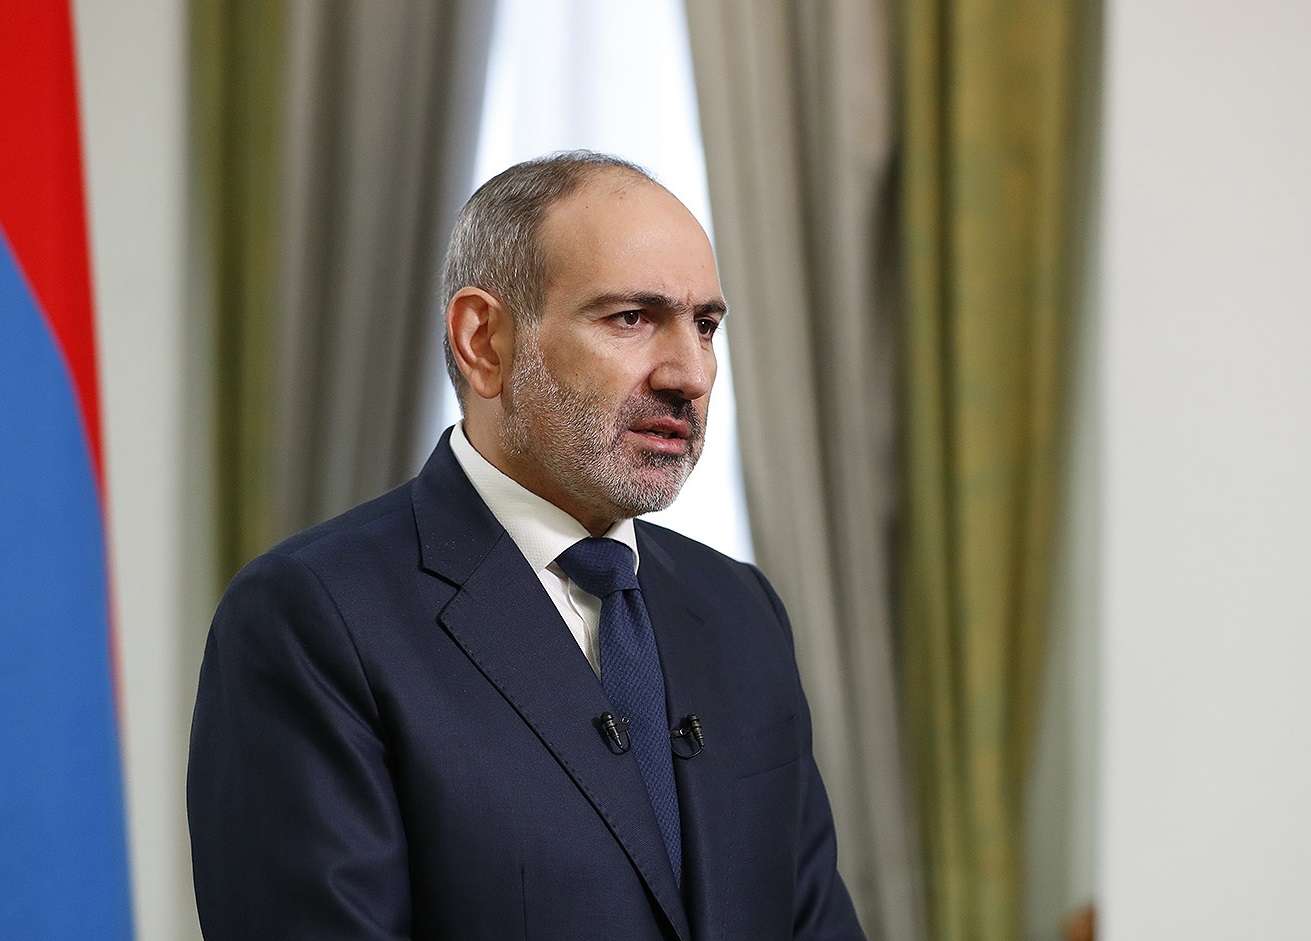 Armenia to exit Russian-led military bloc - PM Pashinyan